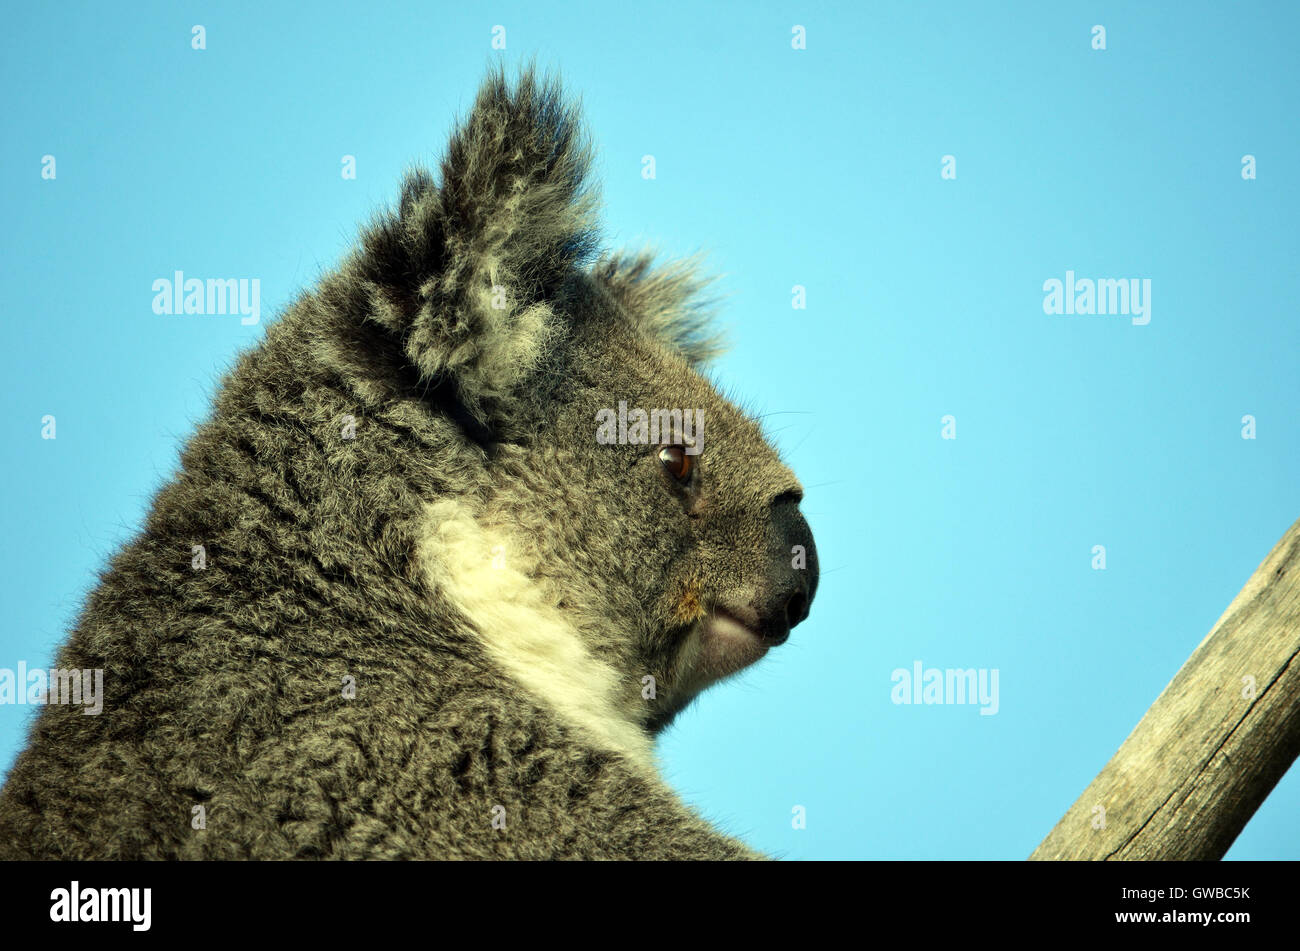 Australian Koala (Phascolarctos cinereus) sitting in a gum tree. Blue sky background. Head close up of iconic marsupial. Stock Photo